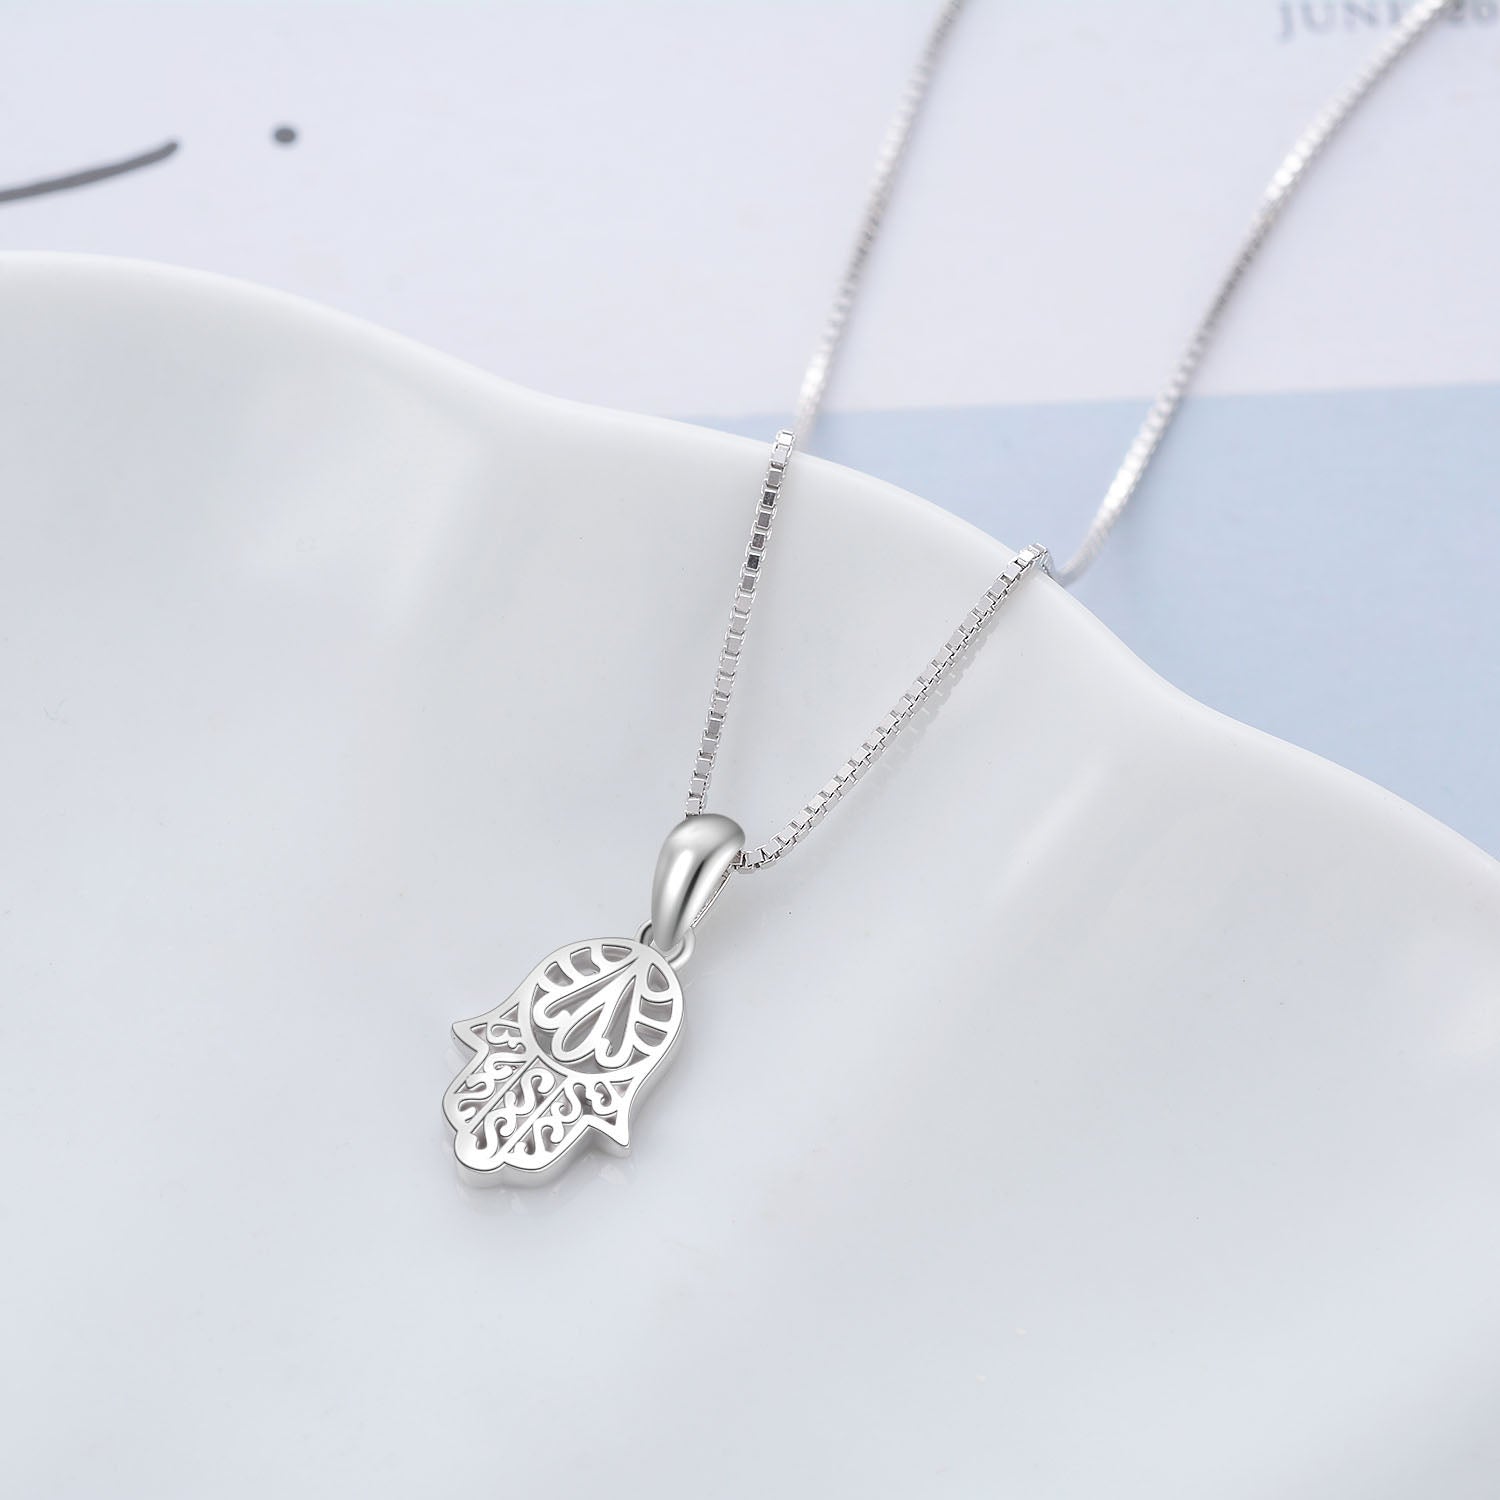 Hamza's Hand Necklace Pendant 925 Sterling Silver Men Jewelry Design